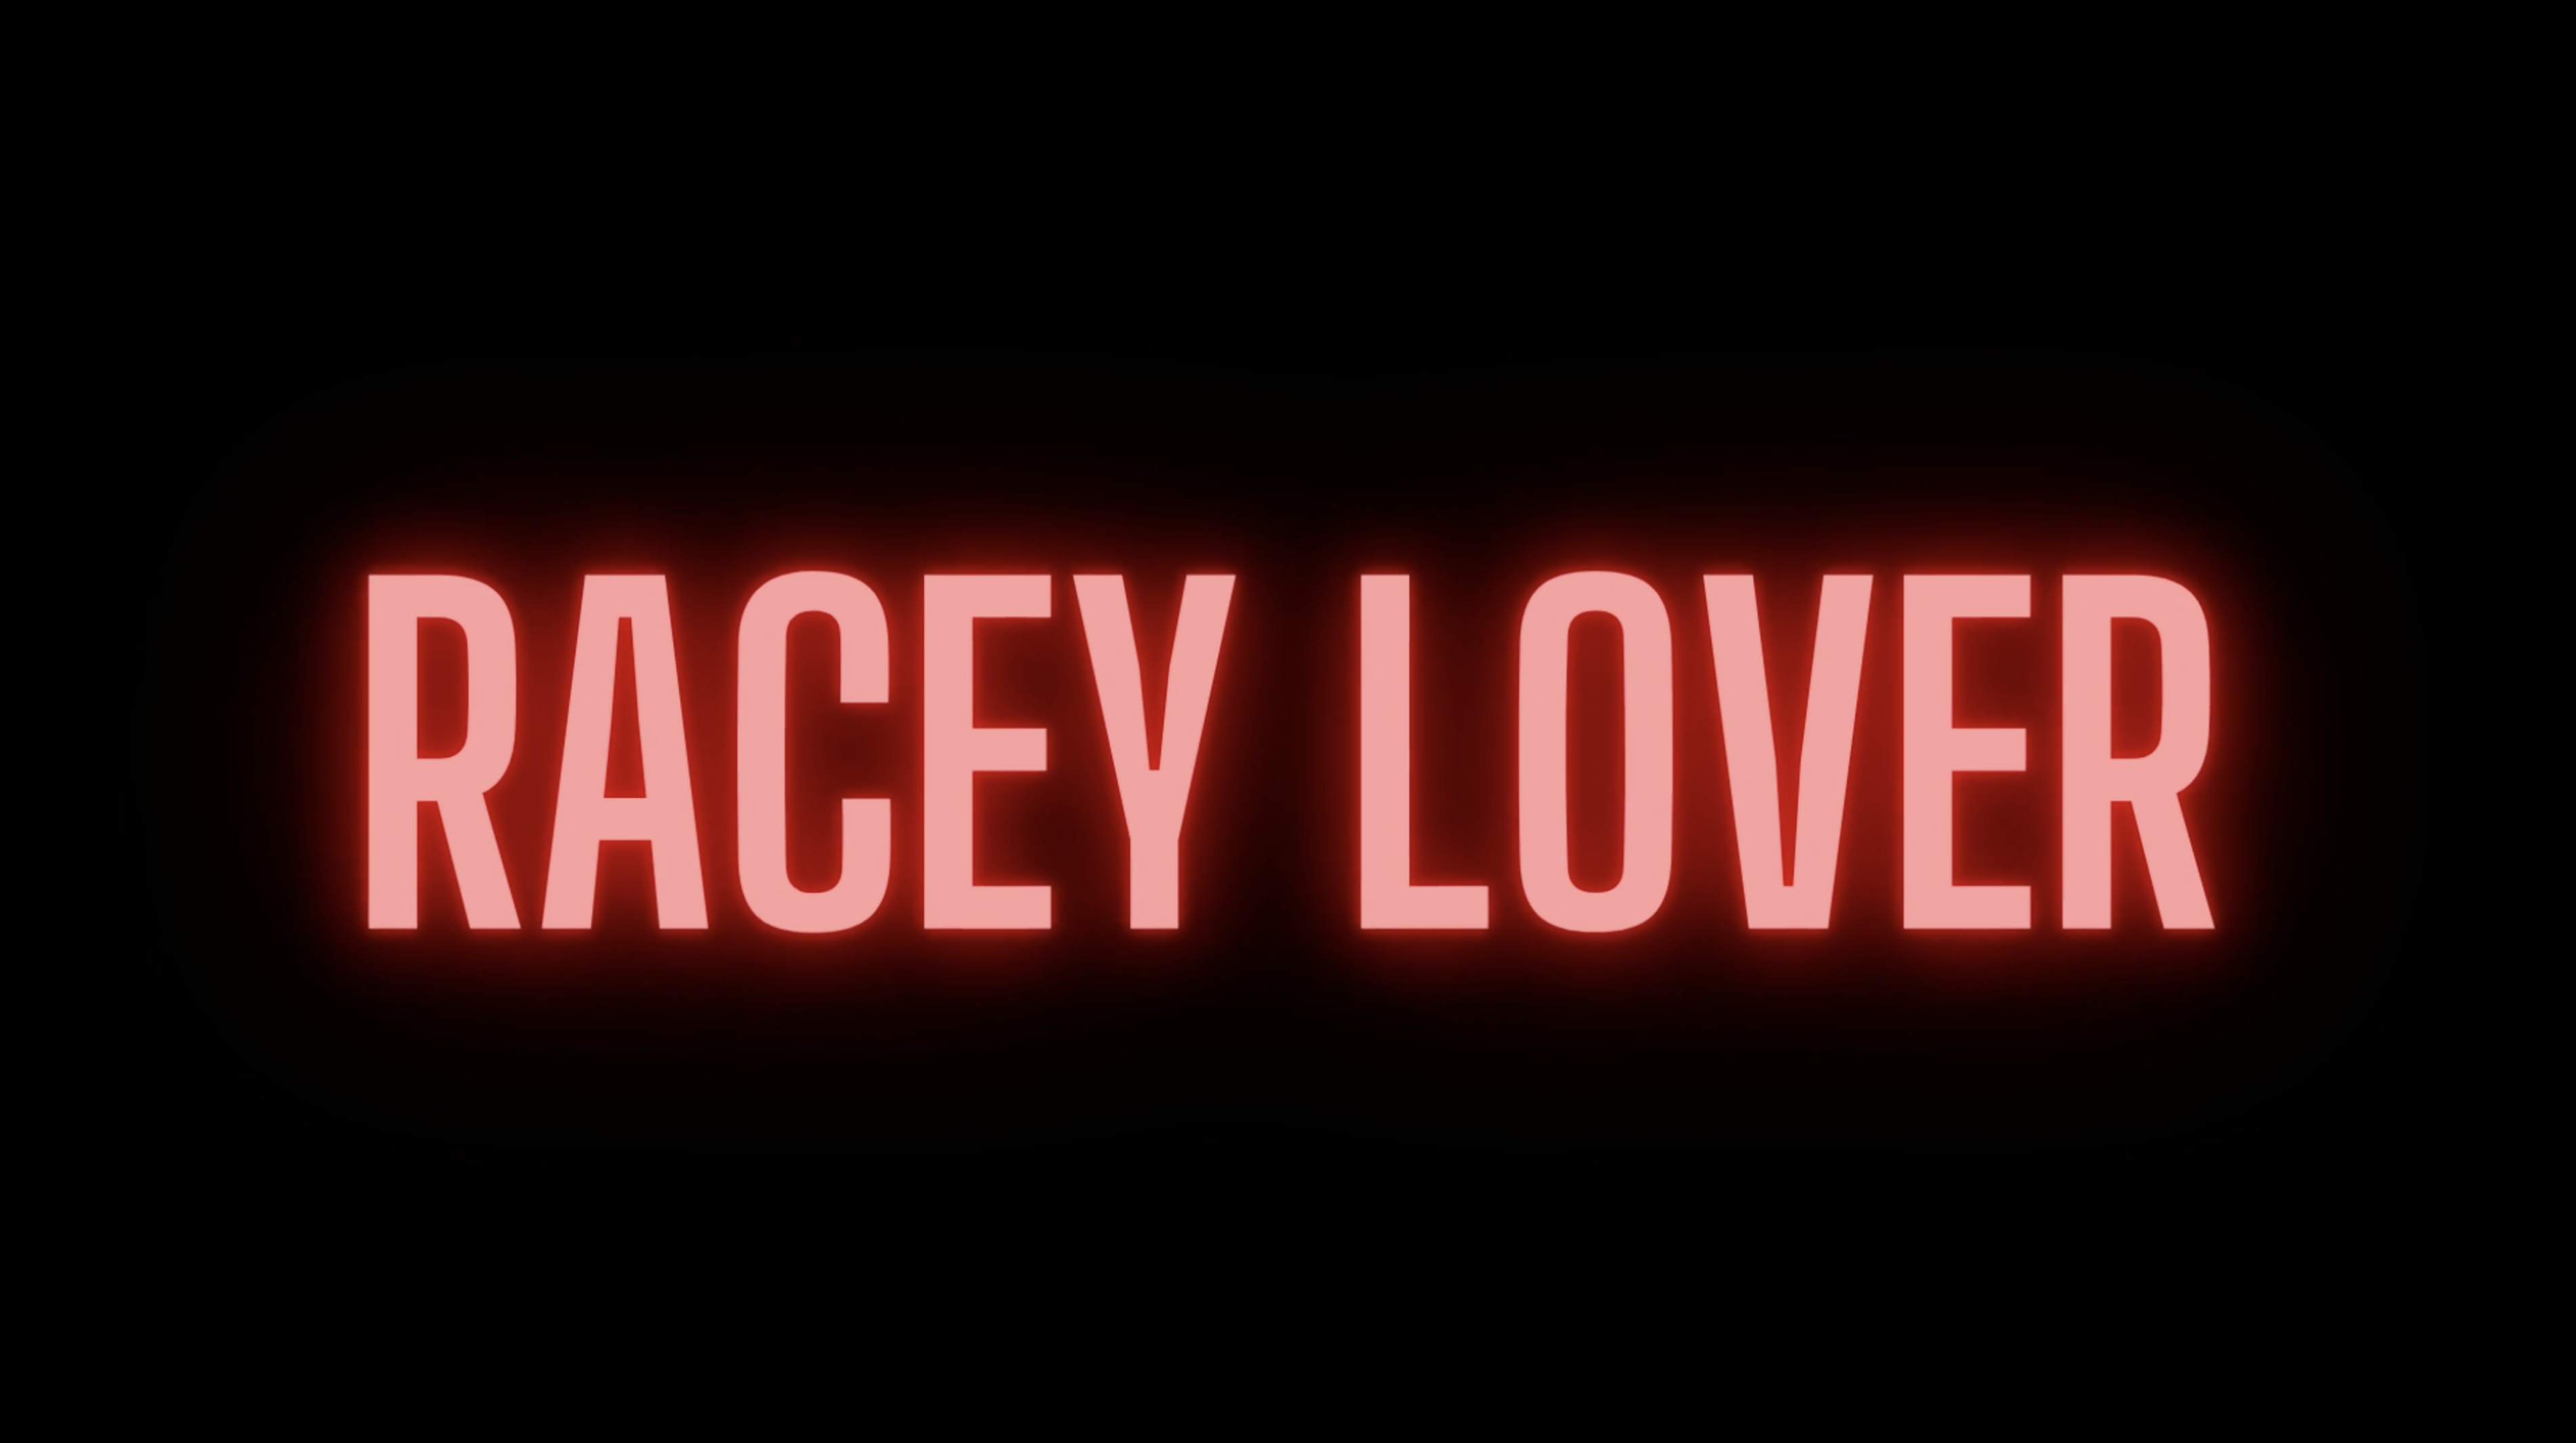 Racey Lover Song Teaser